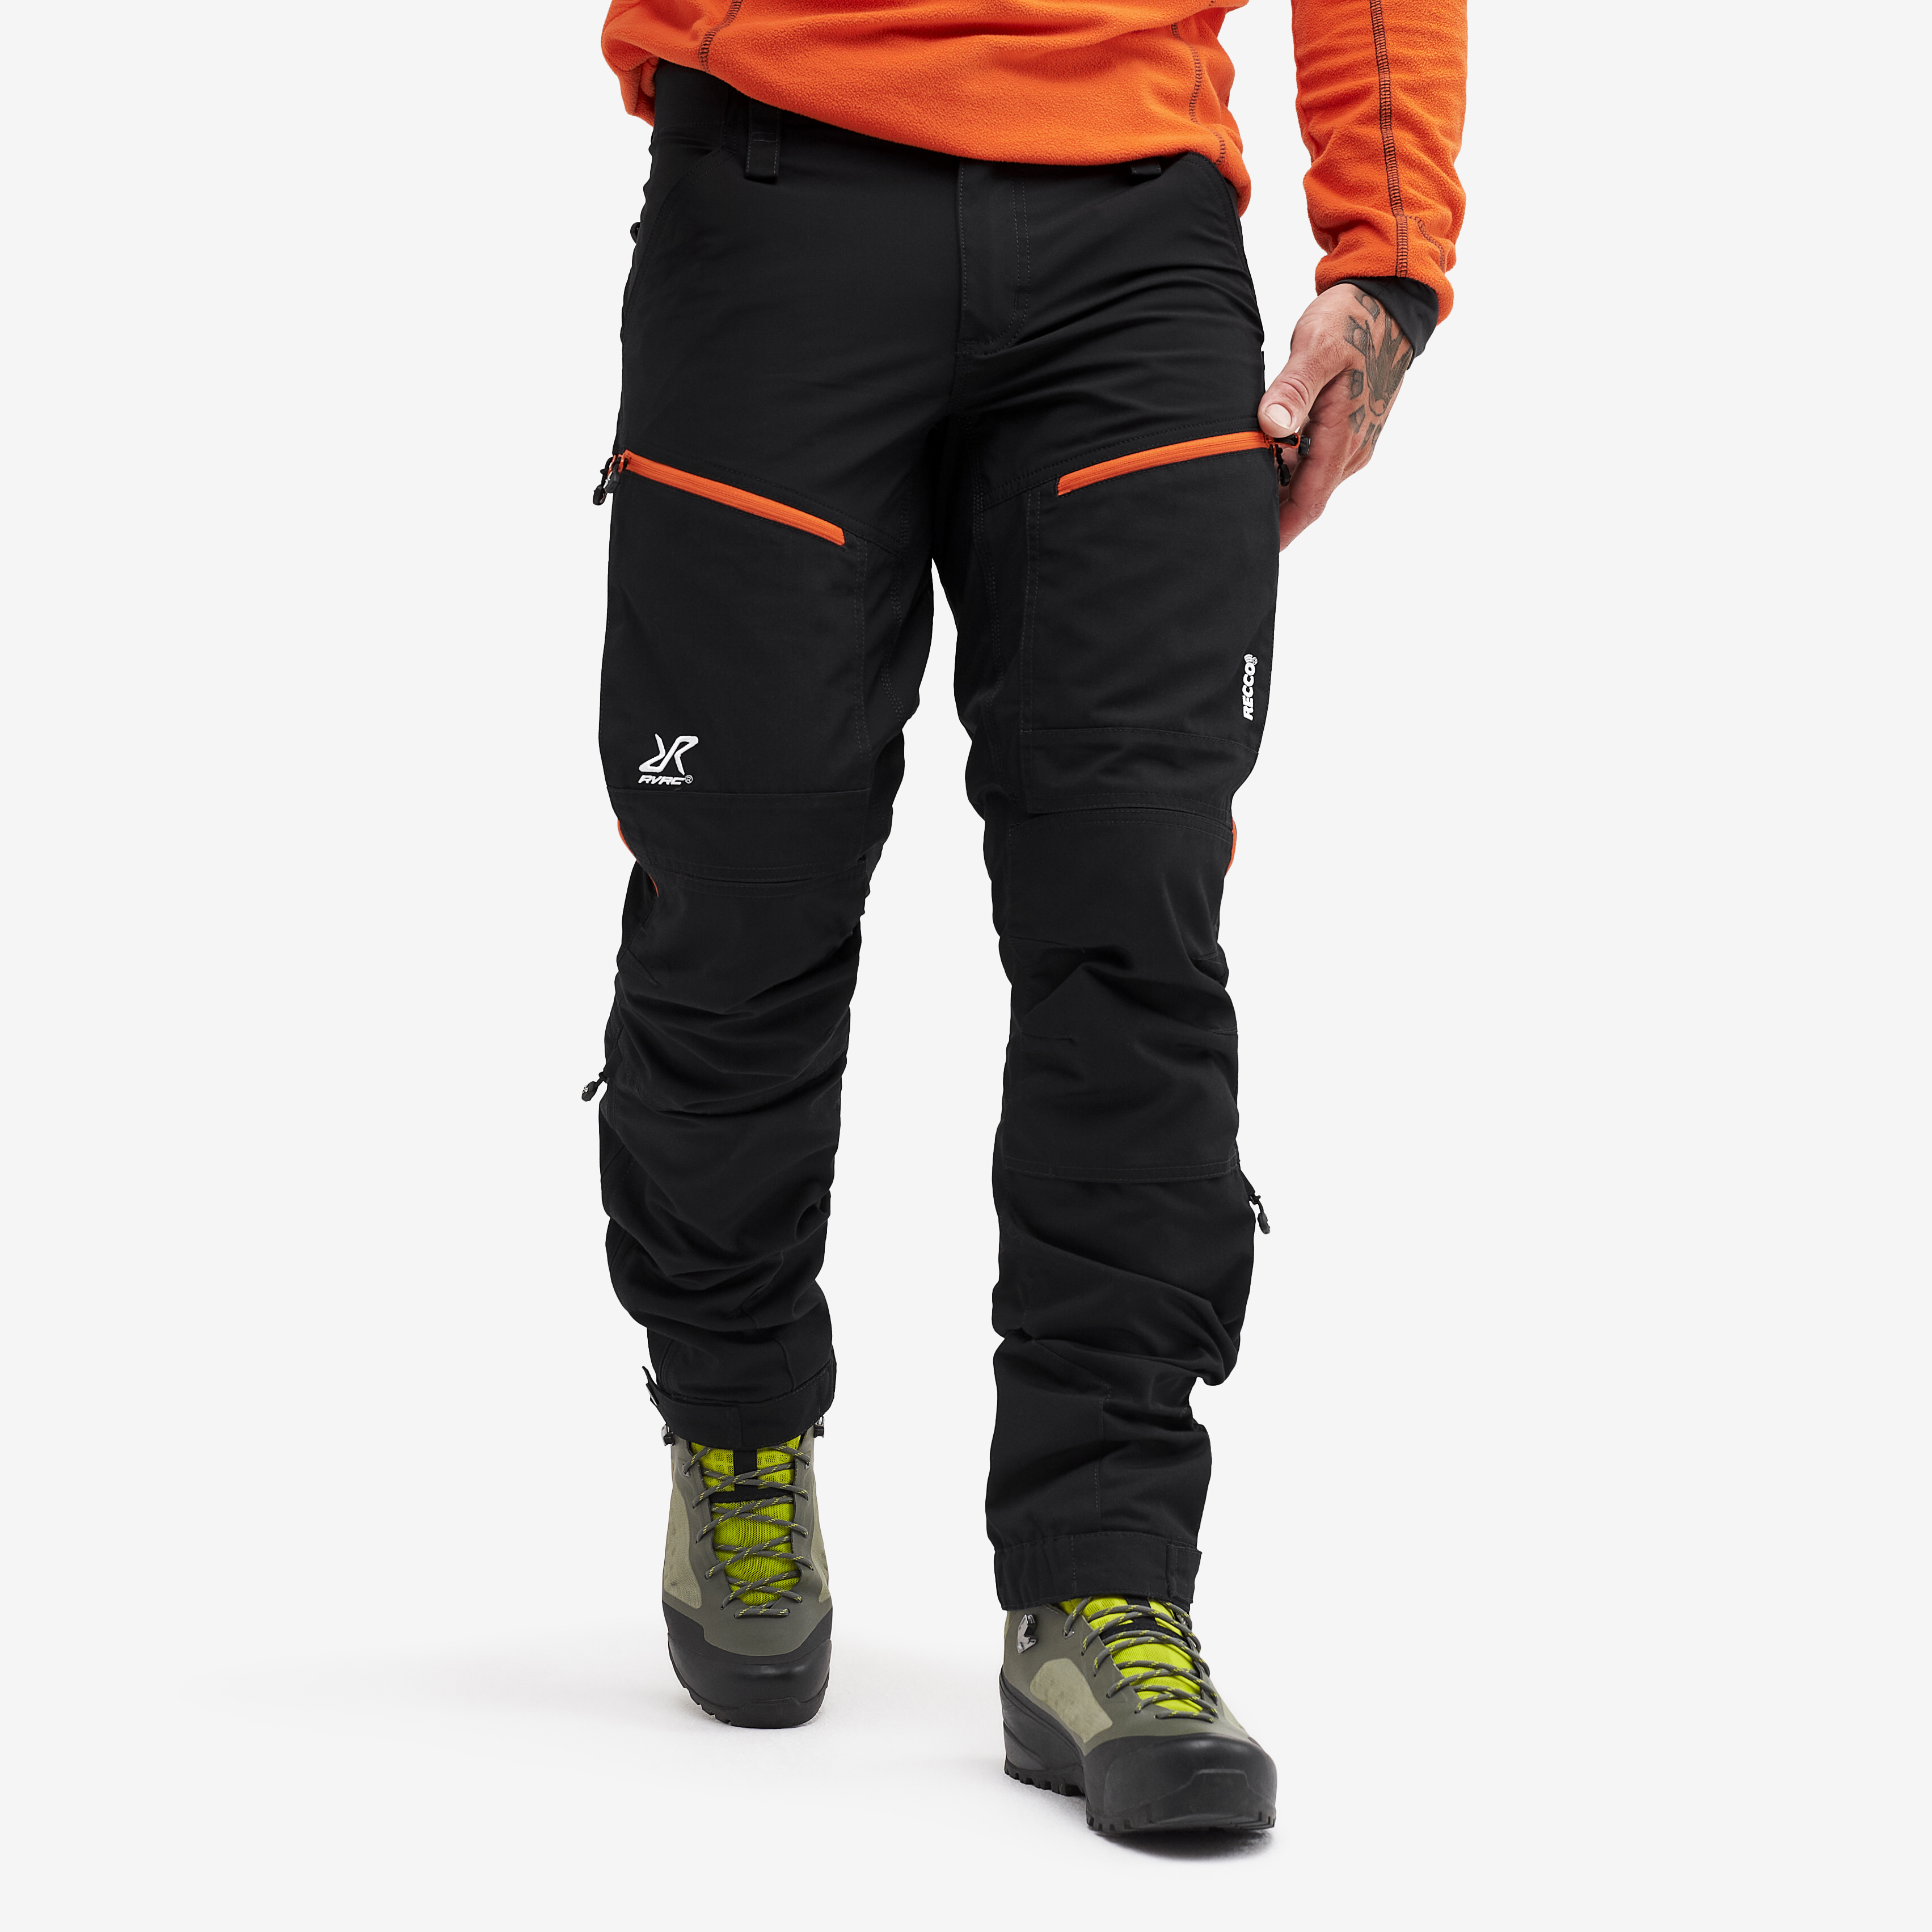 RVRC GP Pro Rescue Pants Black/Orange 2.0 Herren